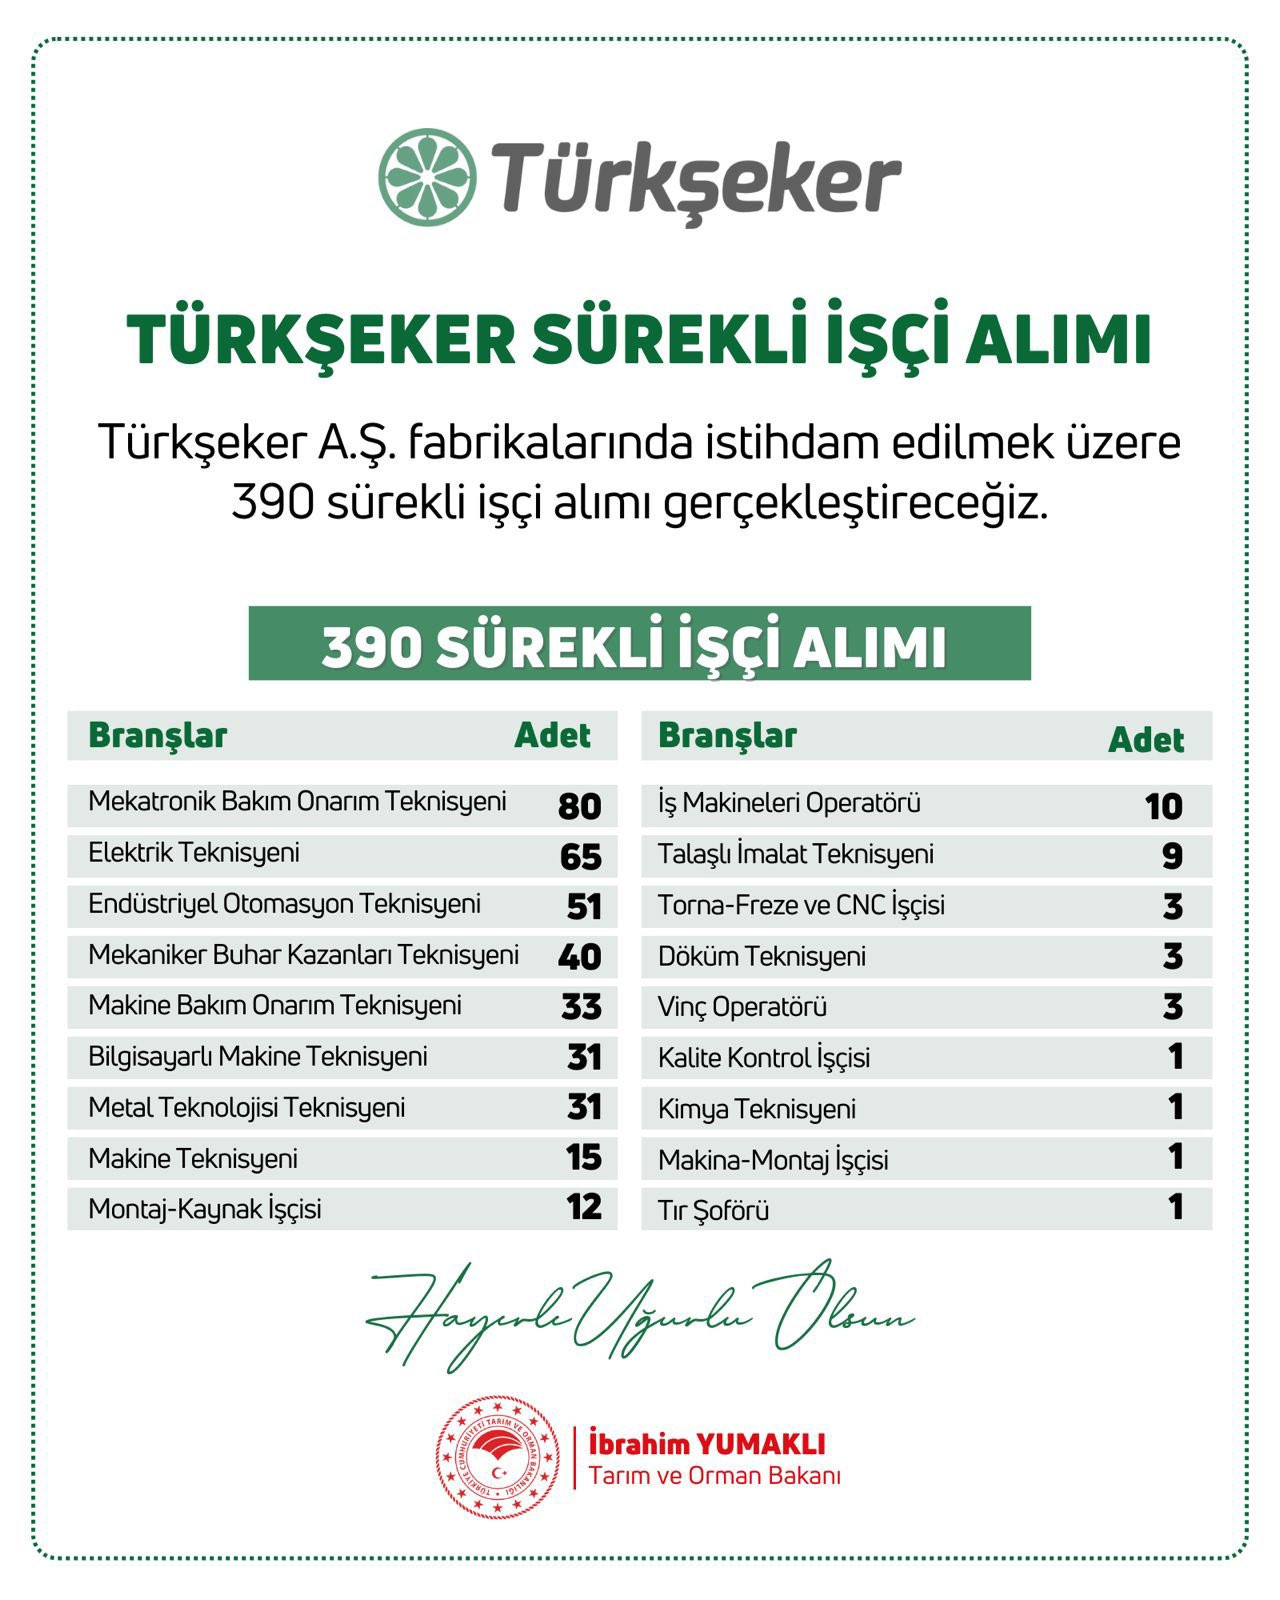 tarim ve ormani bakani yumakli duyurdu turkiye seker fabrikalarina 390 isci alinacak 0 hbI1qFHd